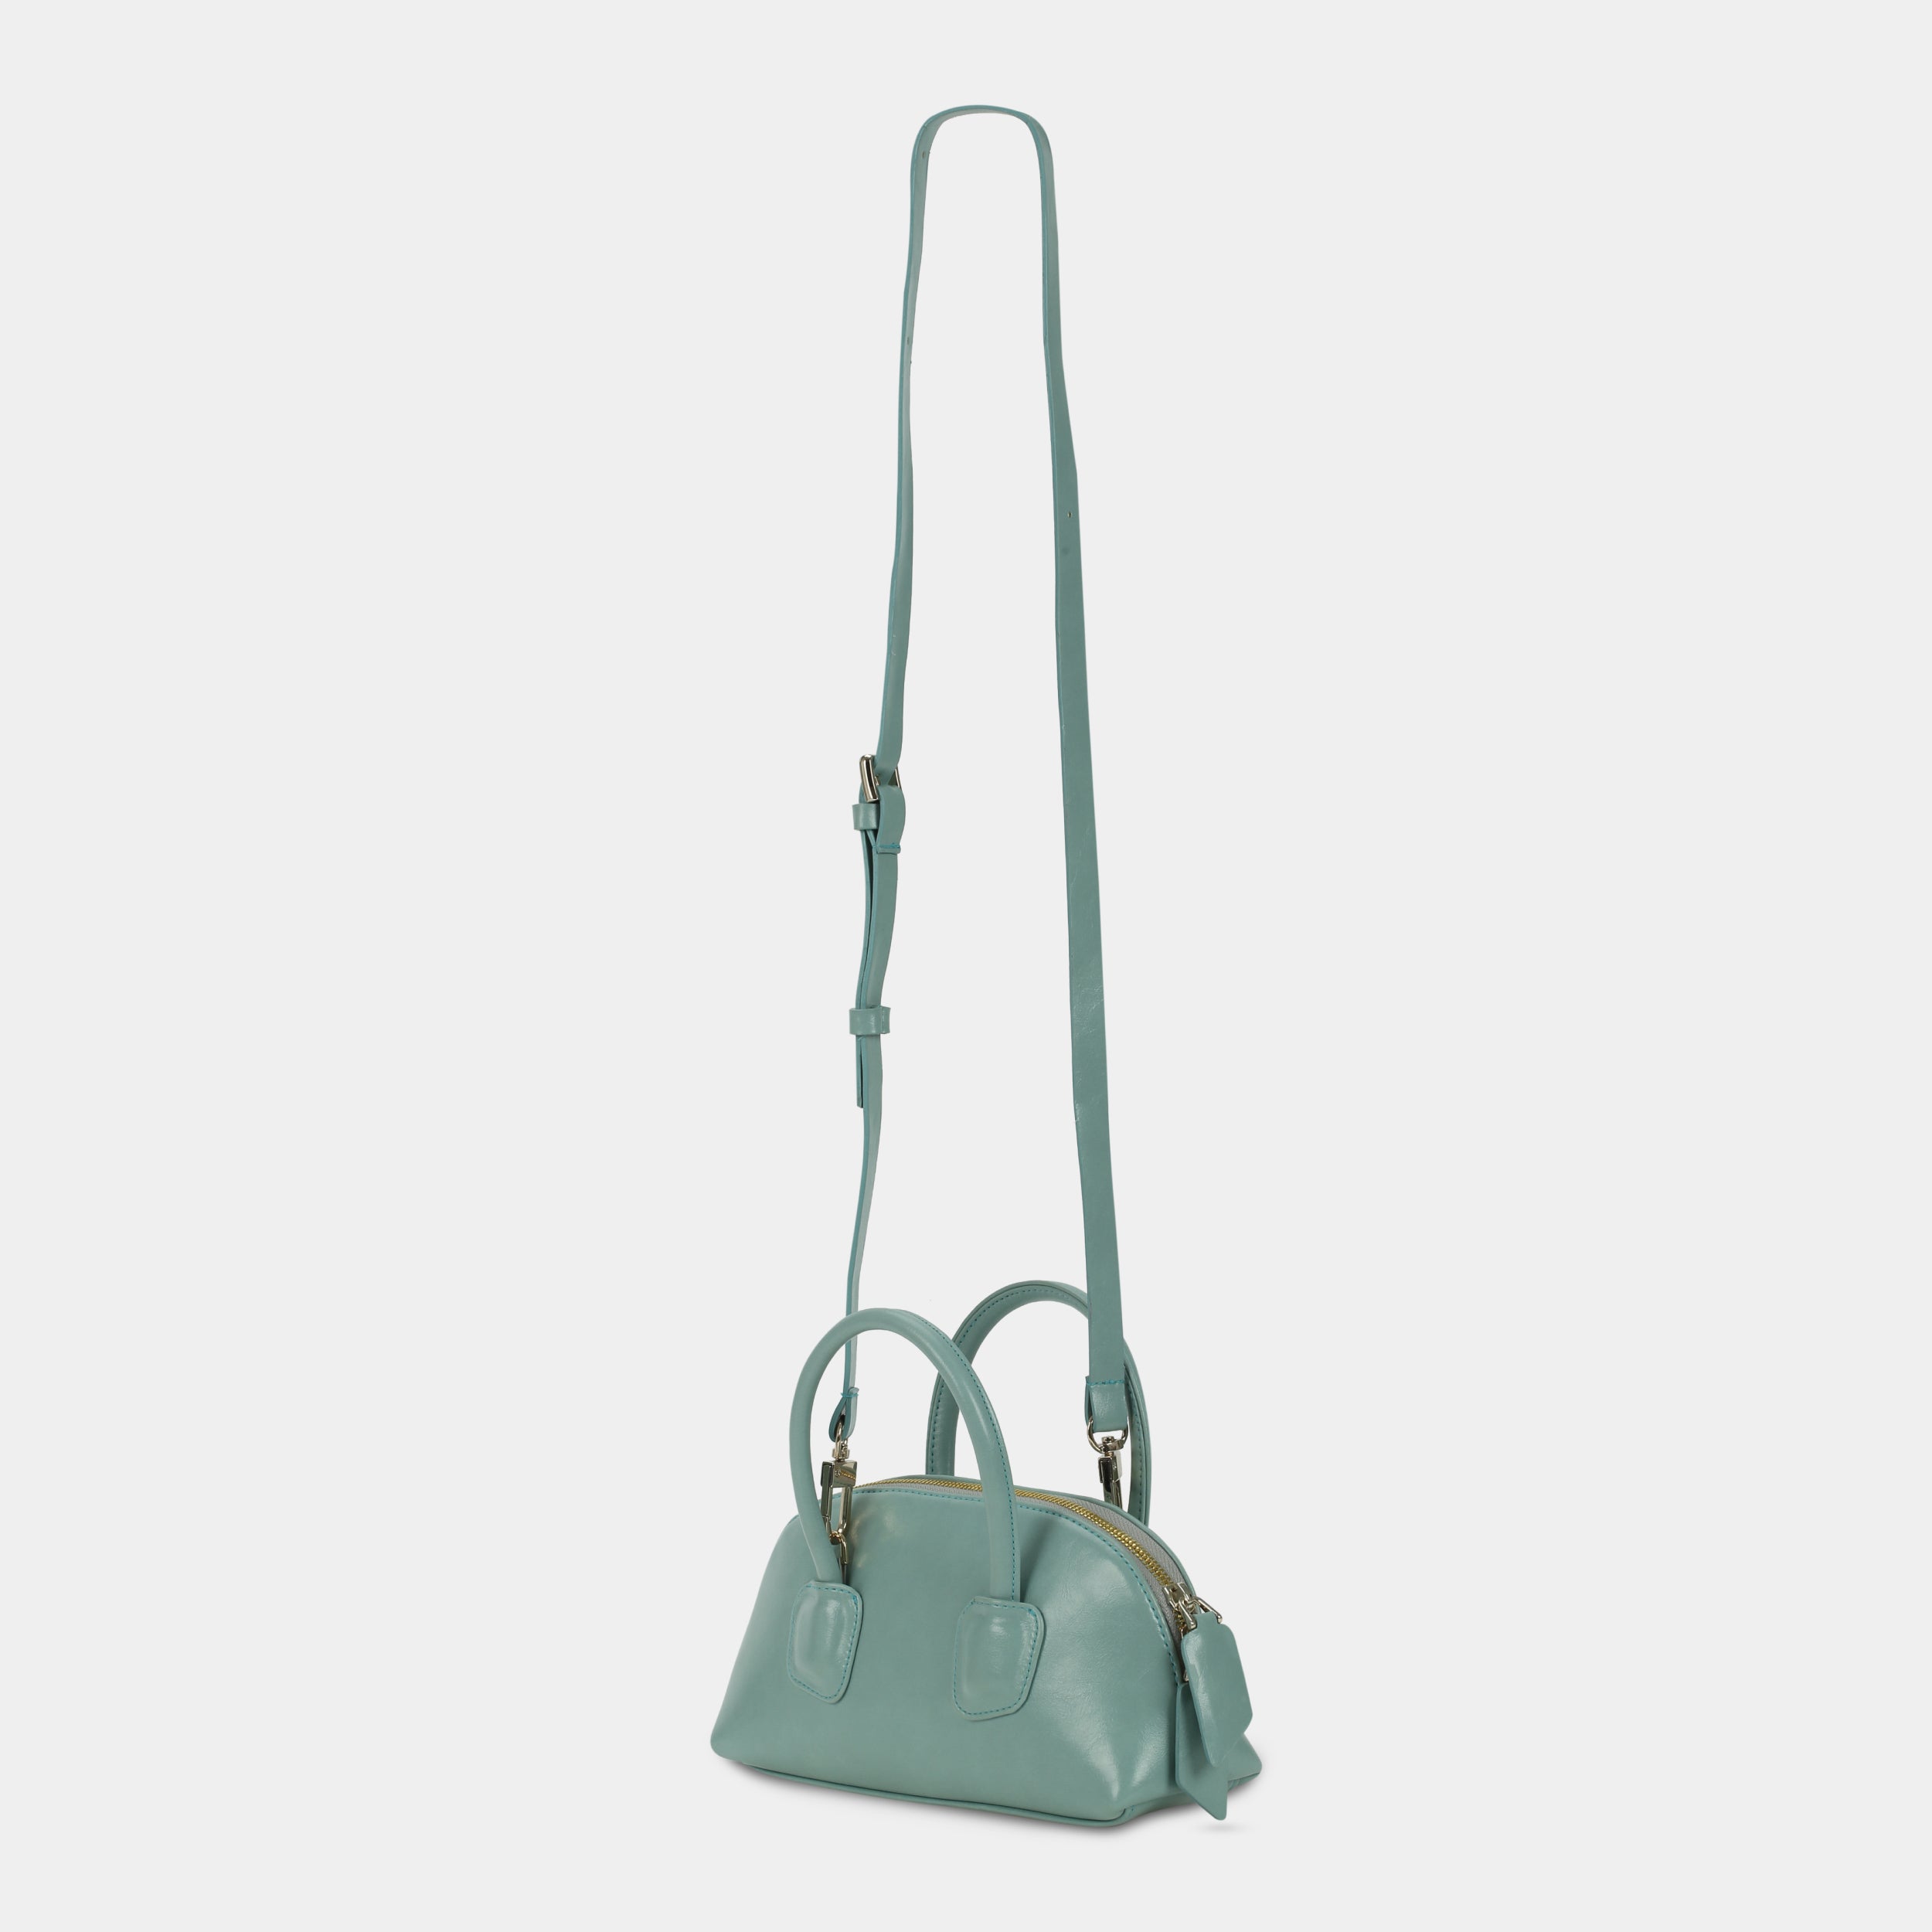 TACOS handbag pastel blue small size (S)